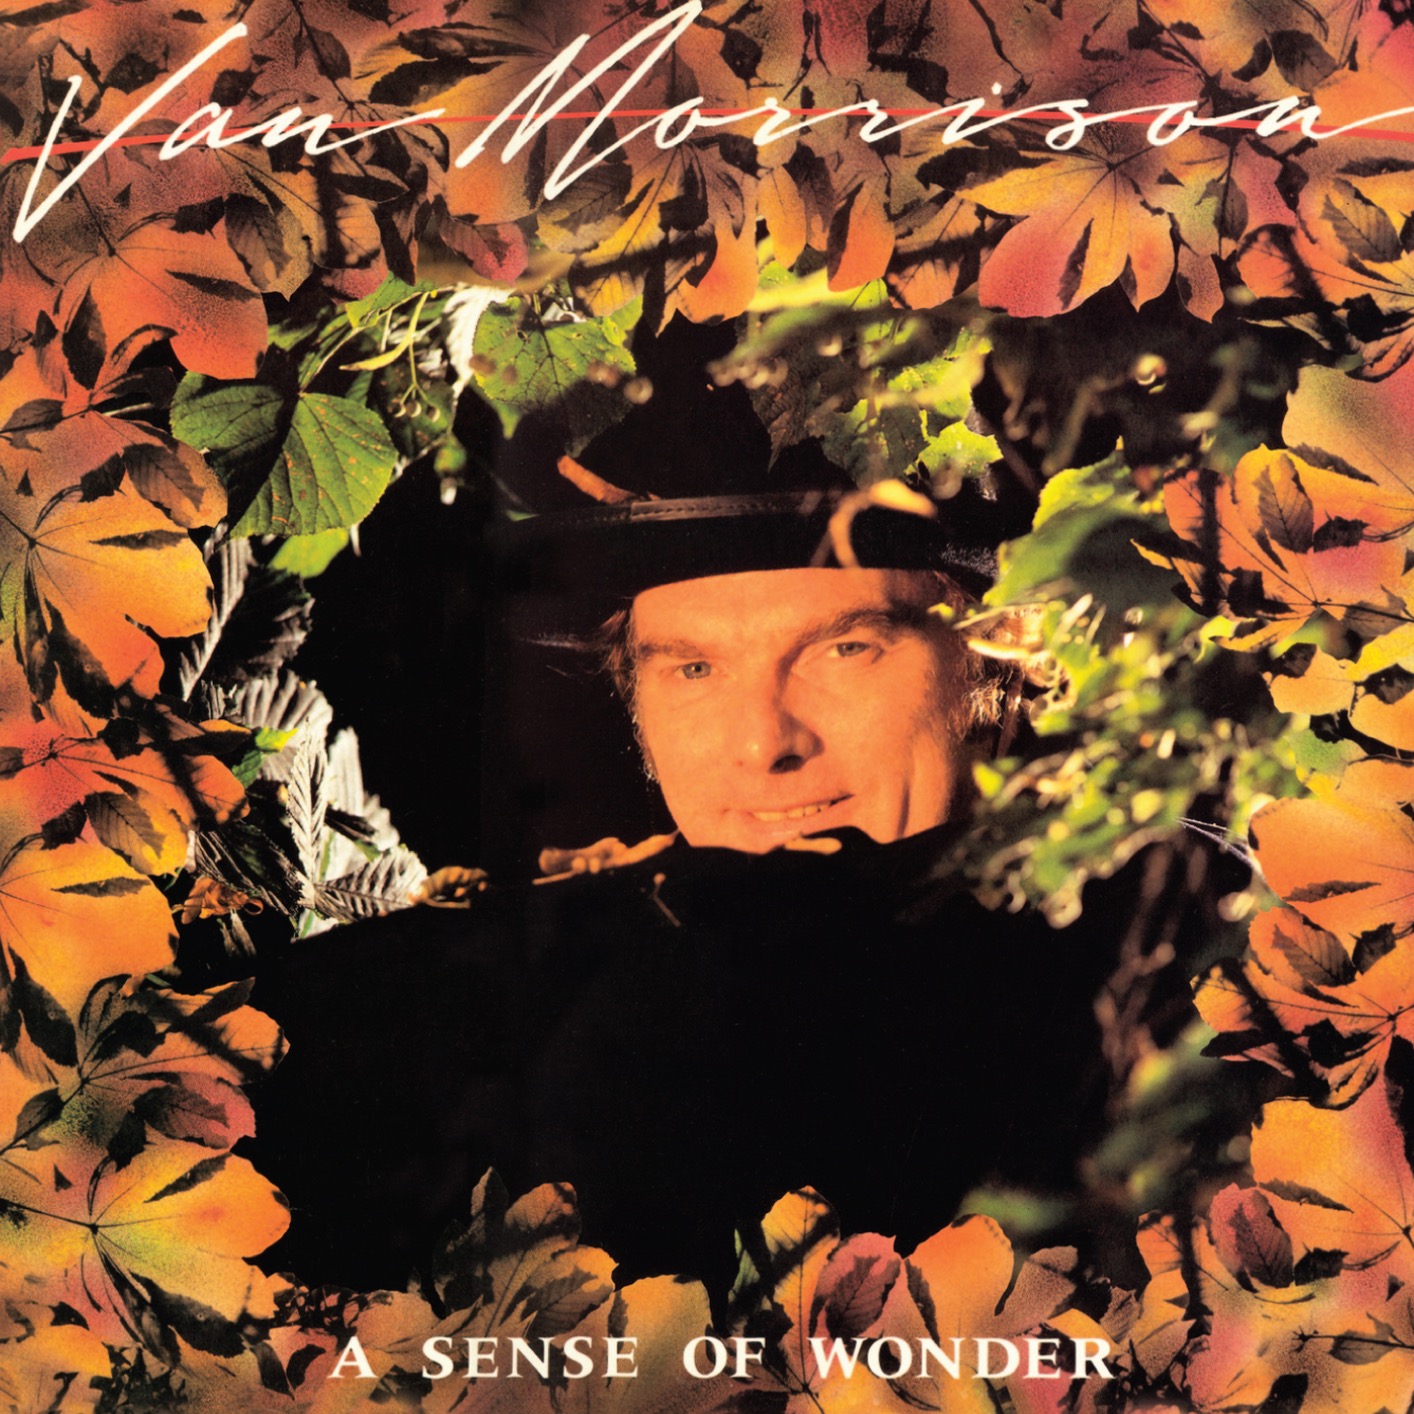 Van Morrison – A Sense of Wonder (Remastered) (1985/2020) [FLAC 24bit/96kHz]